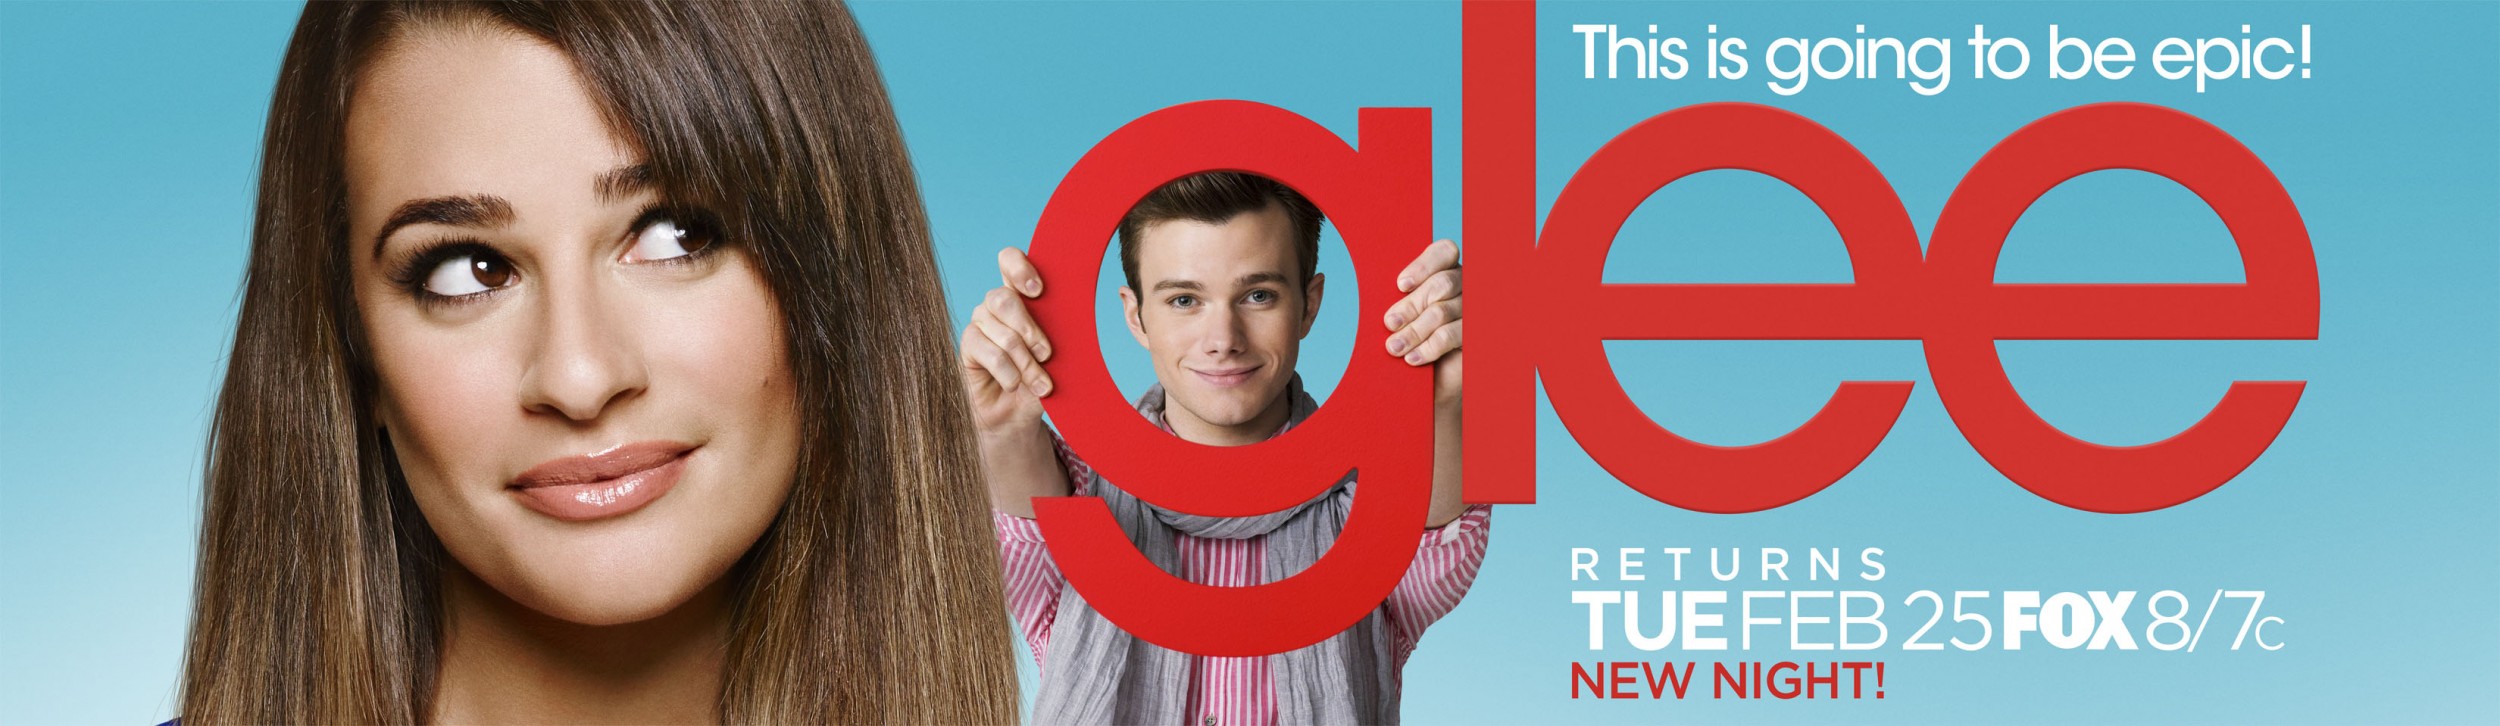 Mega Sized TV Poster Image for Glee (#27 of 30)